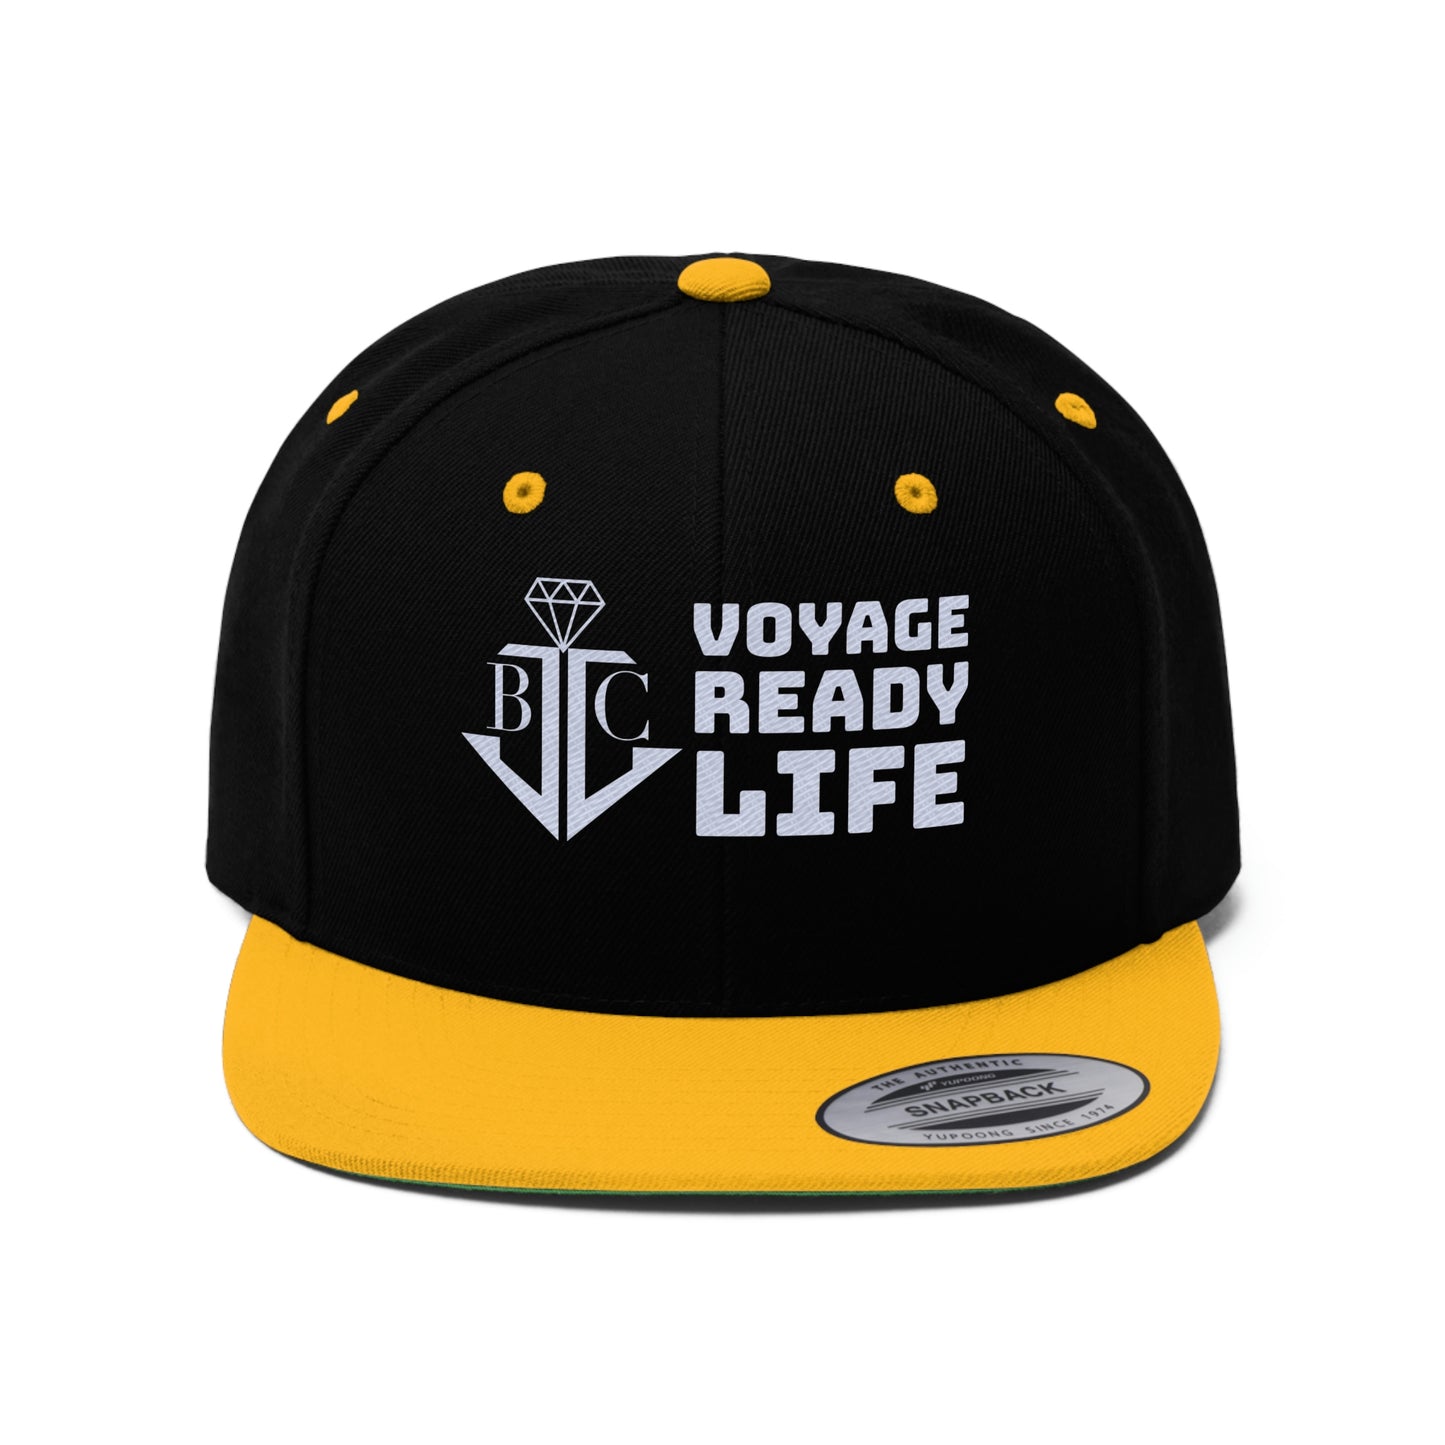 Voyage Ready Life–Unisex Flat Bill Hat